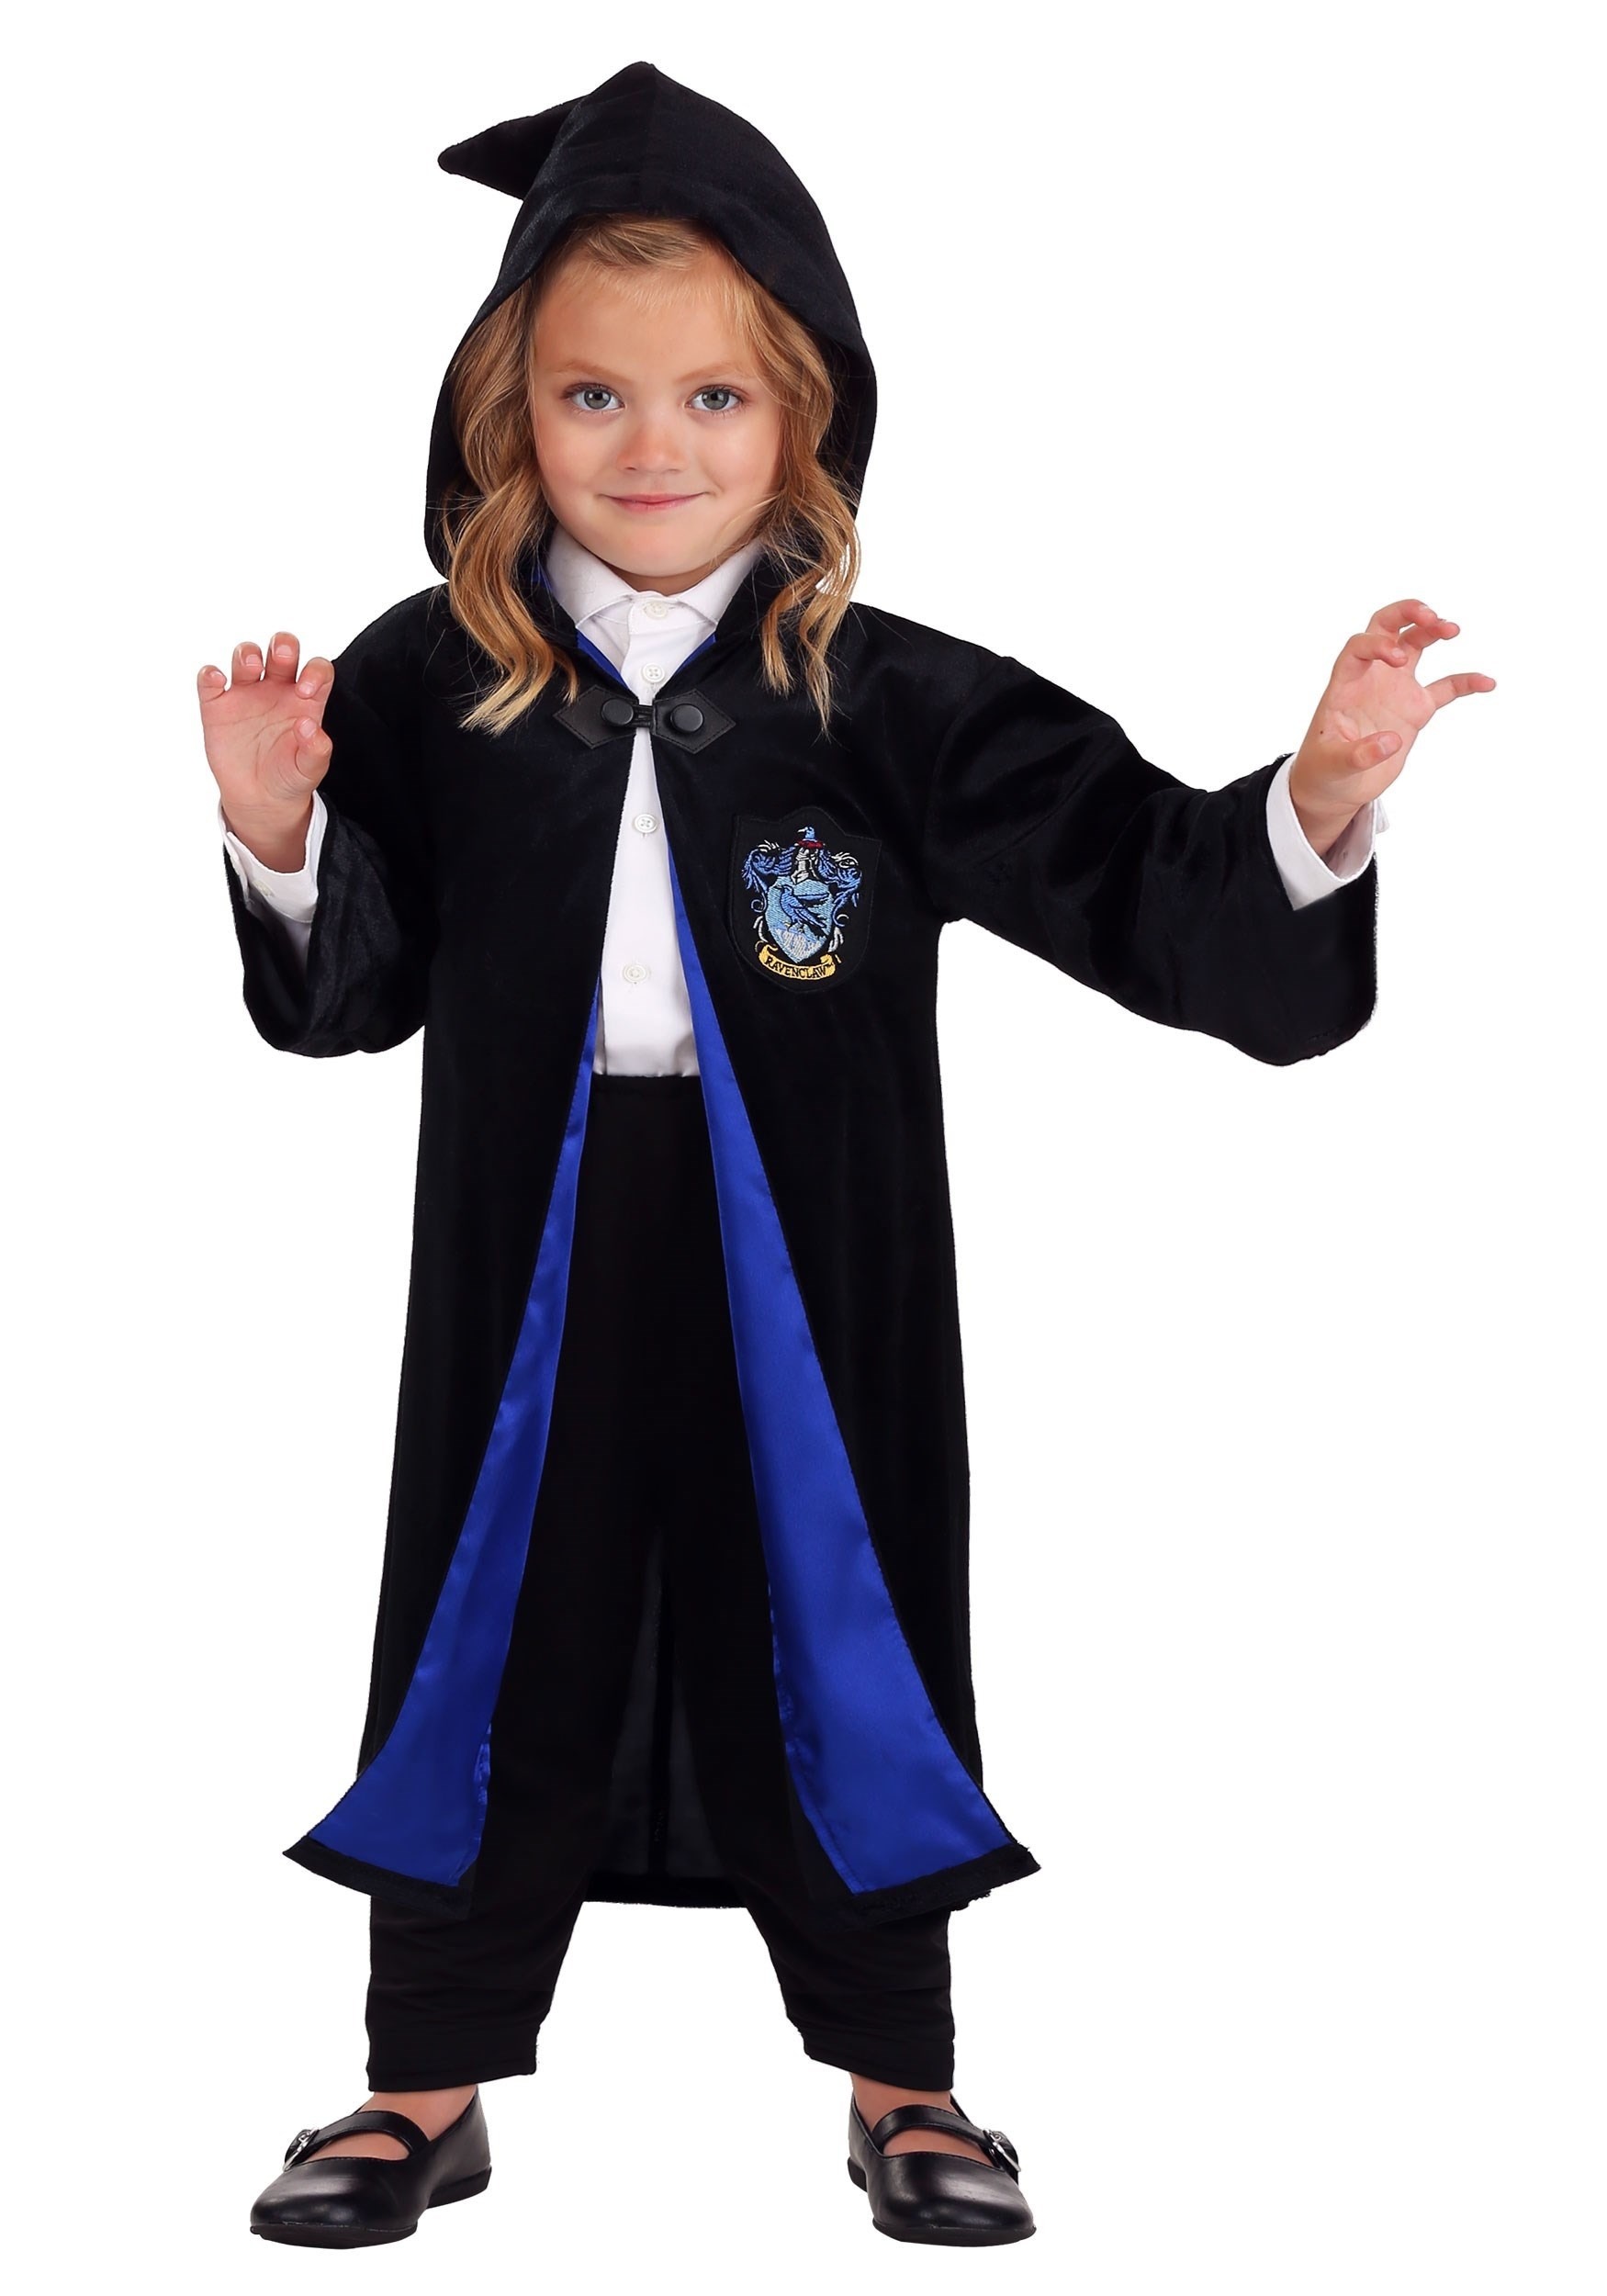 Fato Ravenclaw Harry Potter para criança. Have fun!